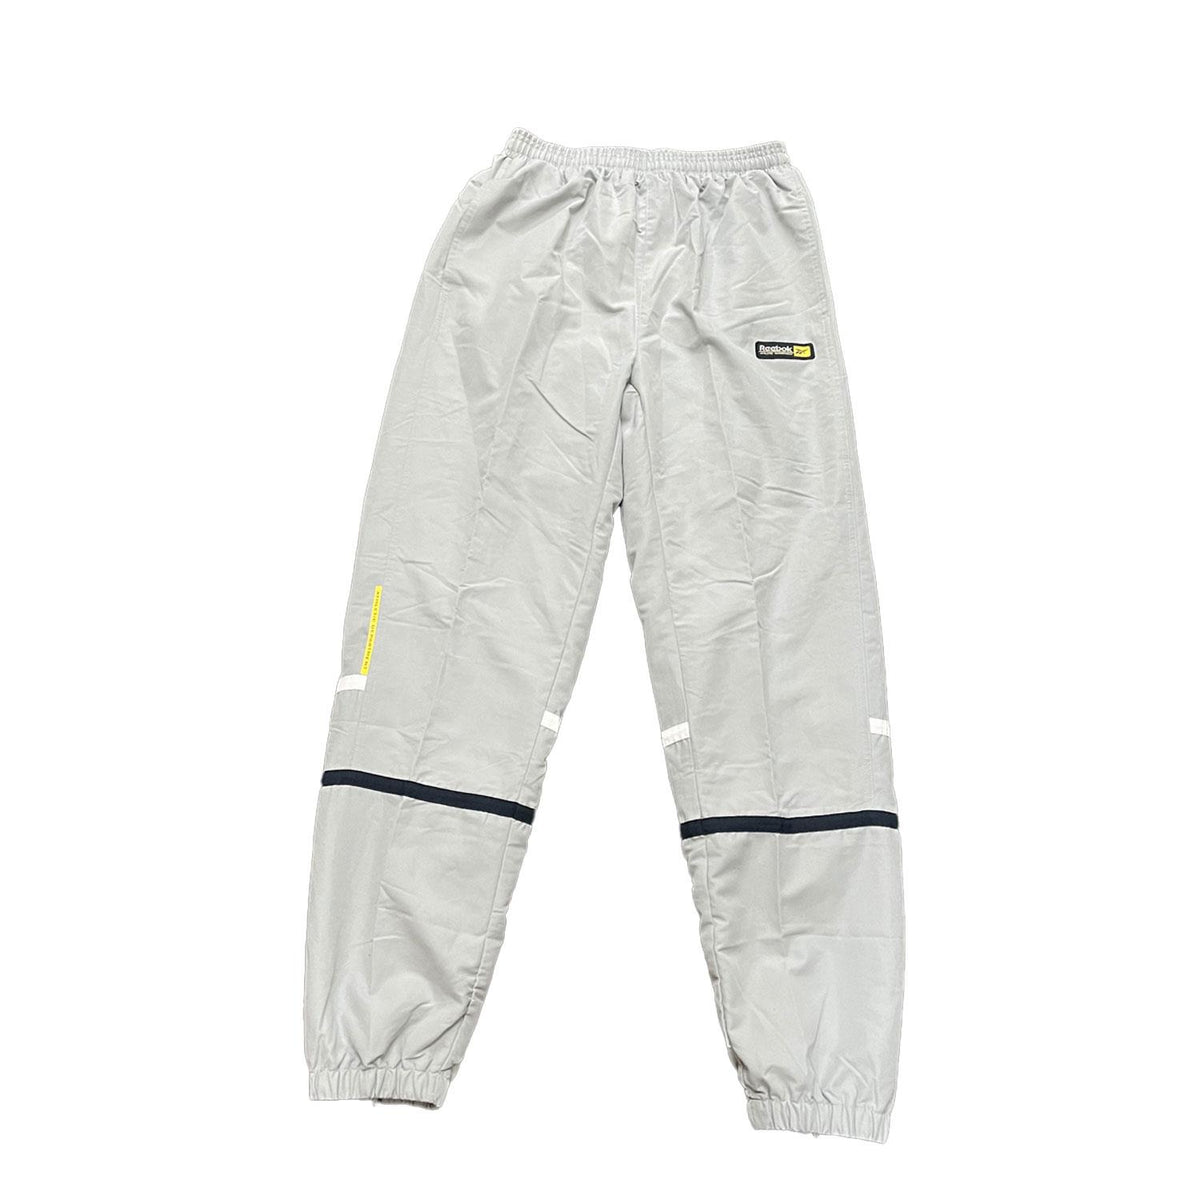 Reebok Original Mens Lined Athletic Department Retro Track Pants - Grey - Medium